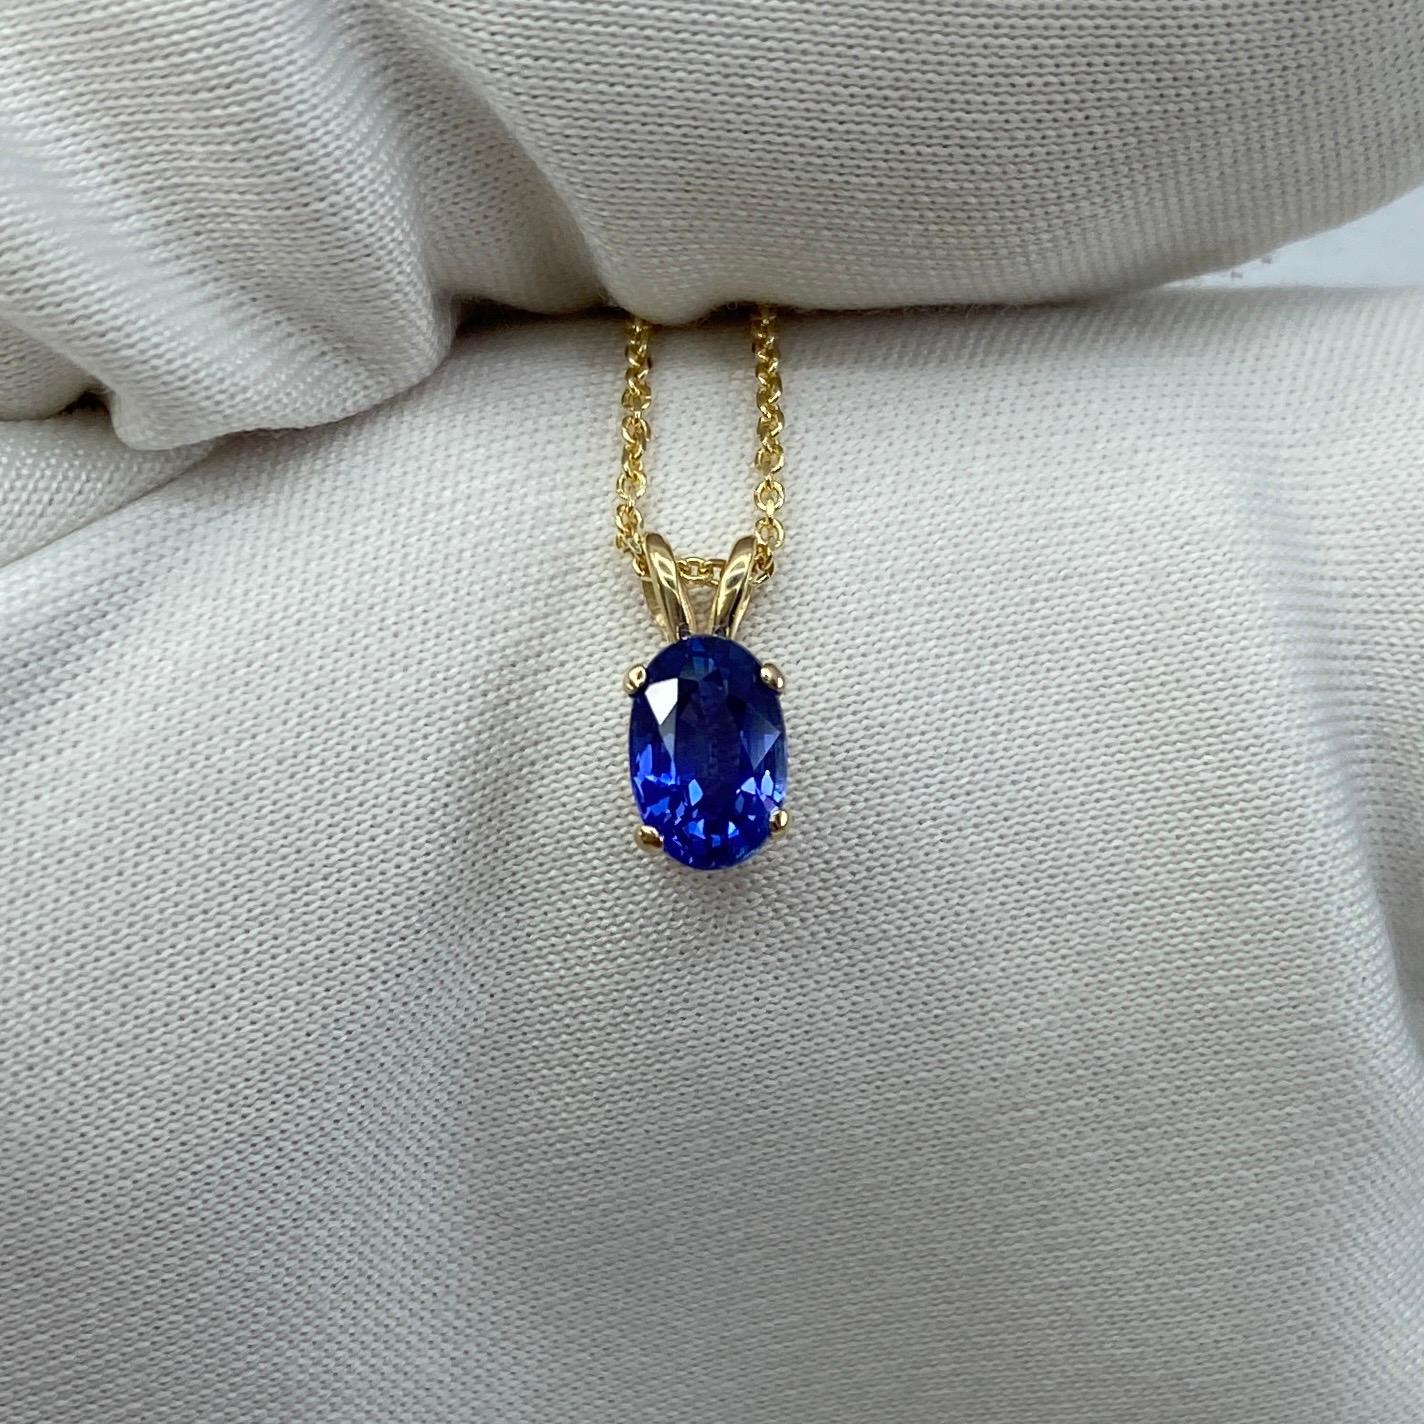 Fine Vivid Blue Oval Cut Sapphire Yellow Gold Solitaire Pendant Necklace 2